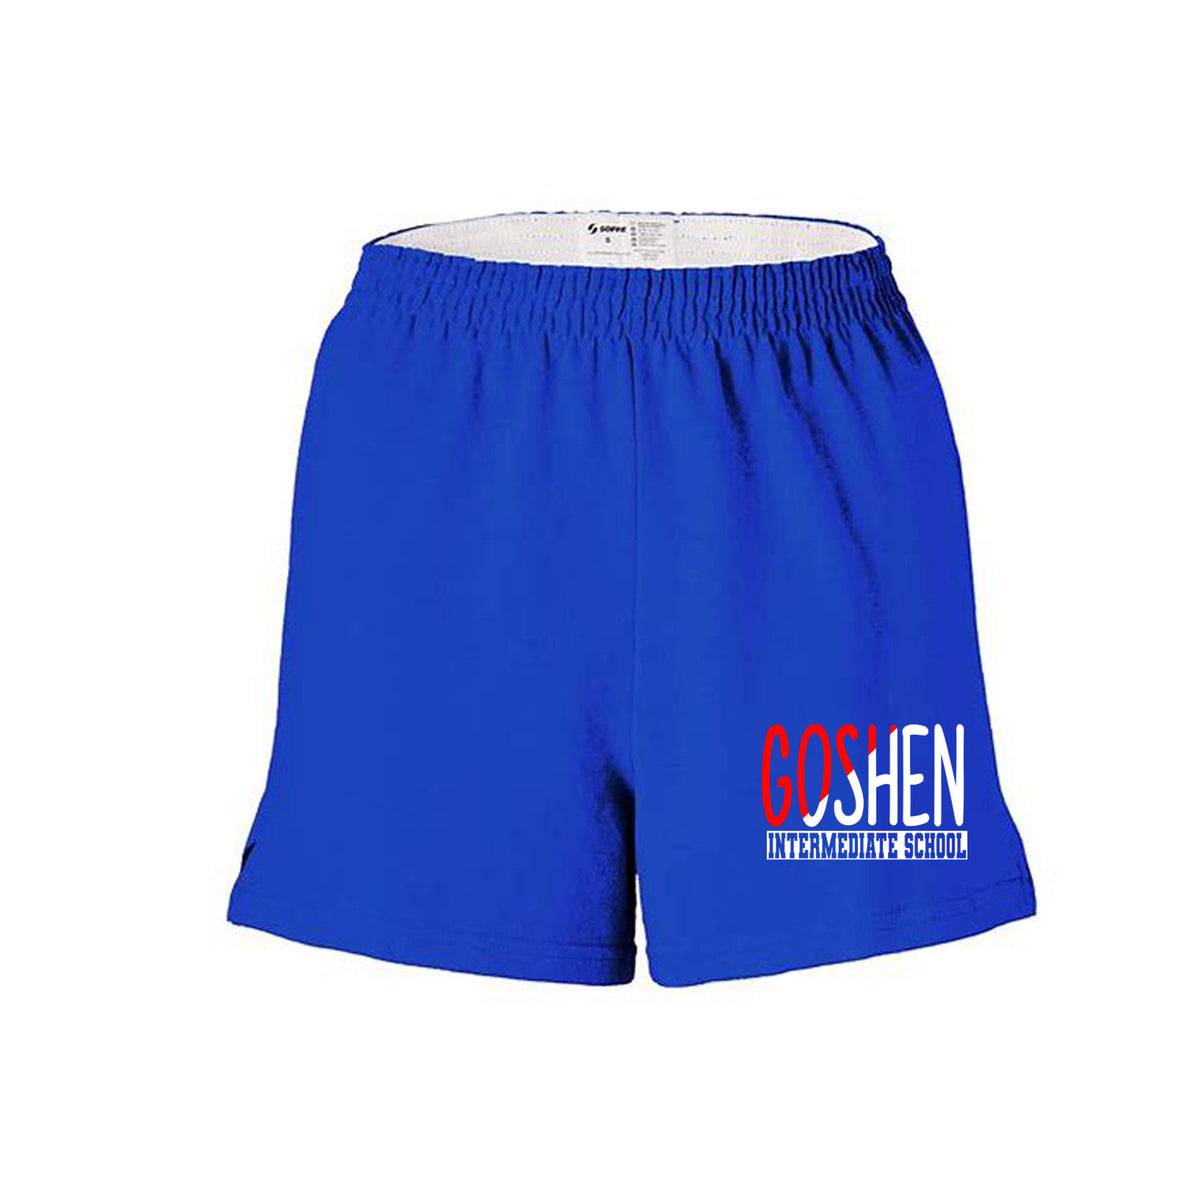 Goshen School Design 3 Shorts